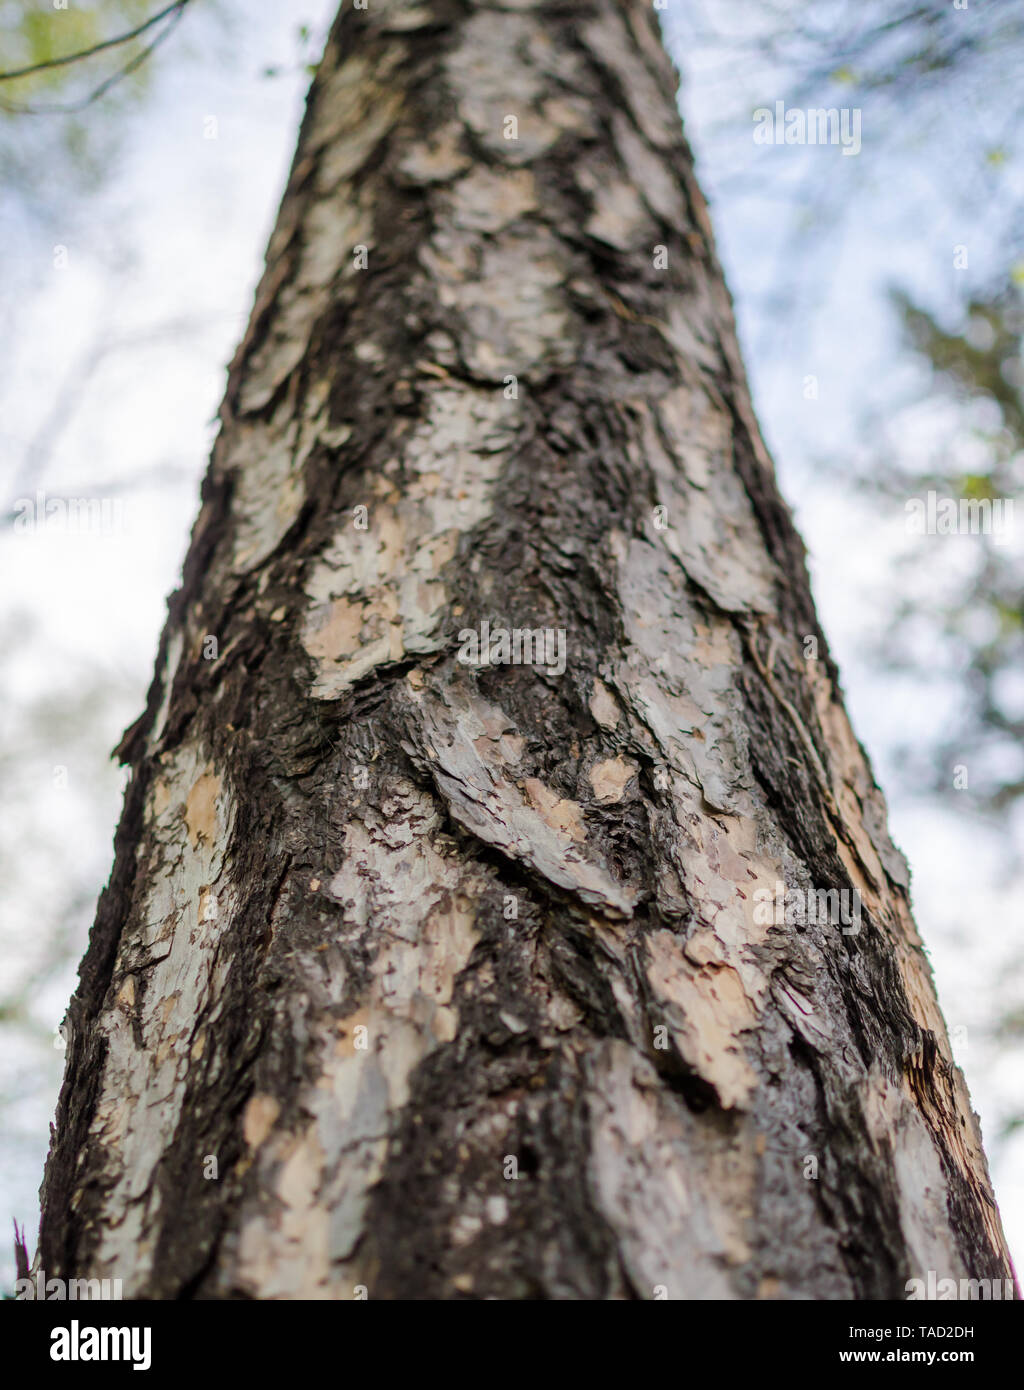 European Larch (larix decidua) bark. close up. Stock Photo